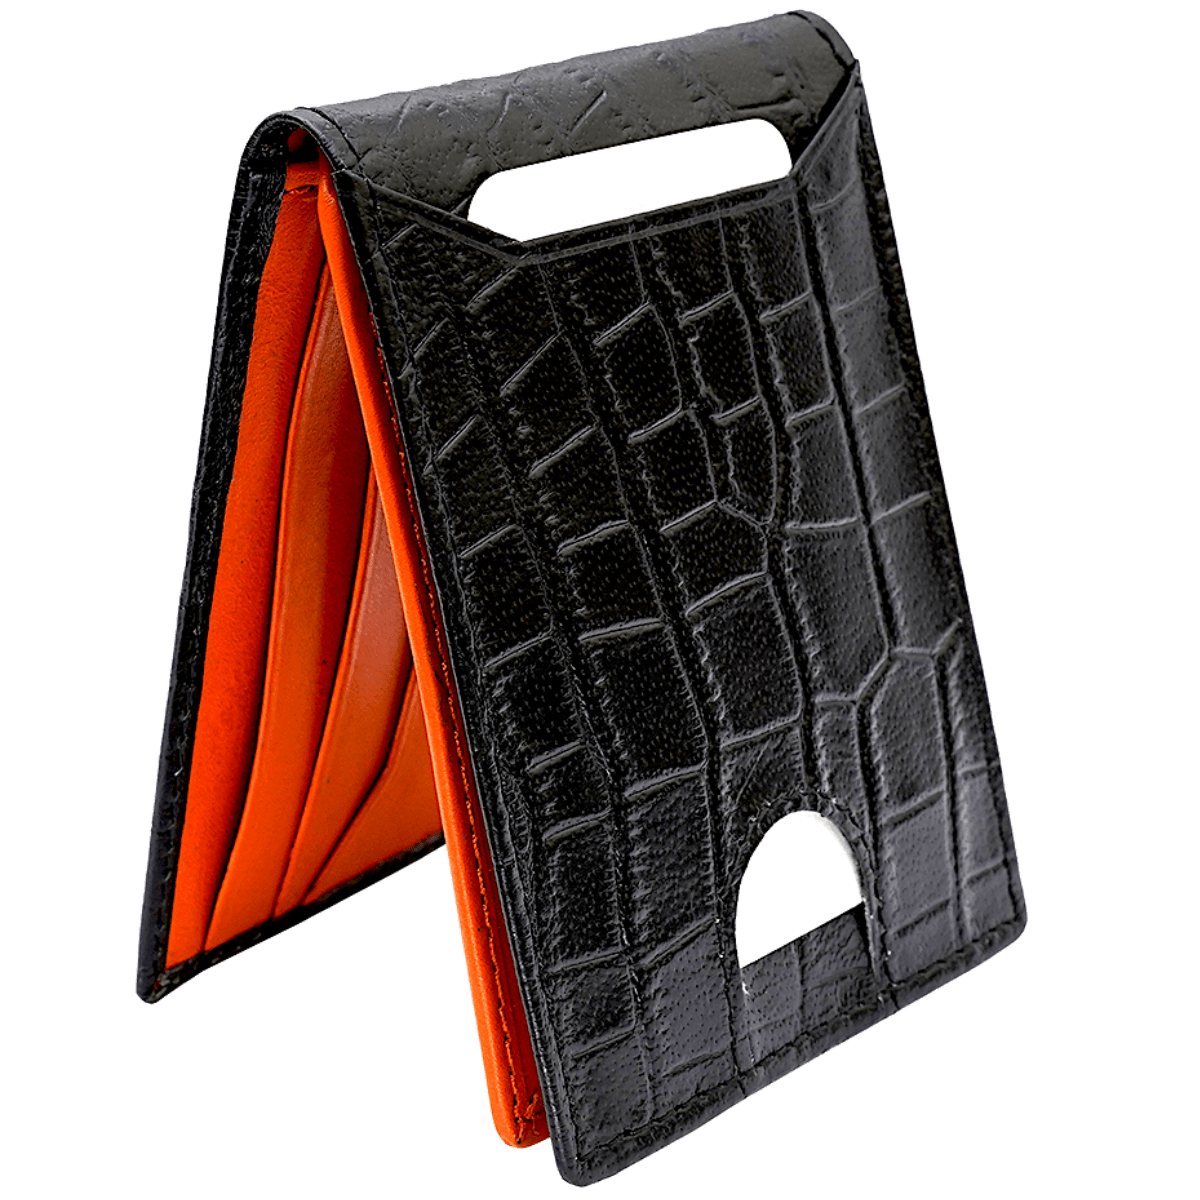 Bi Fold card holder croc pattern with 13 c/c